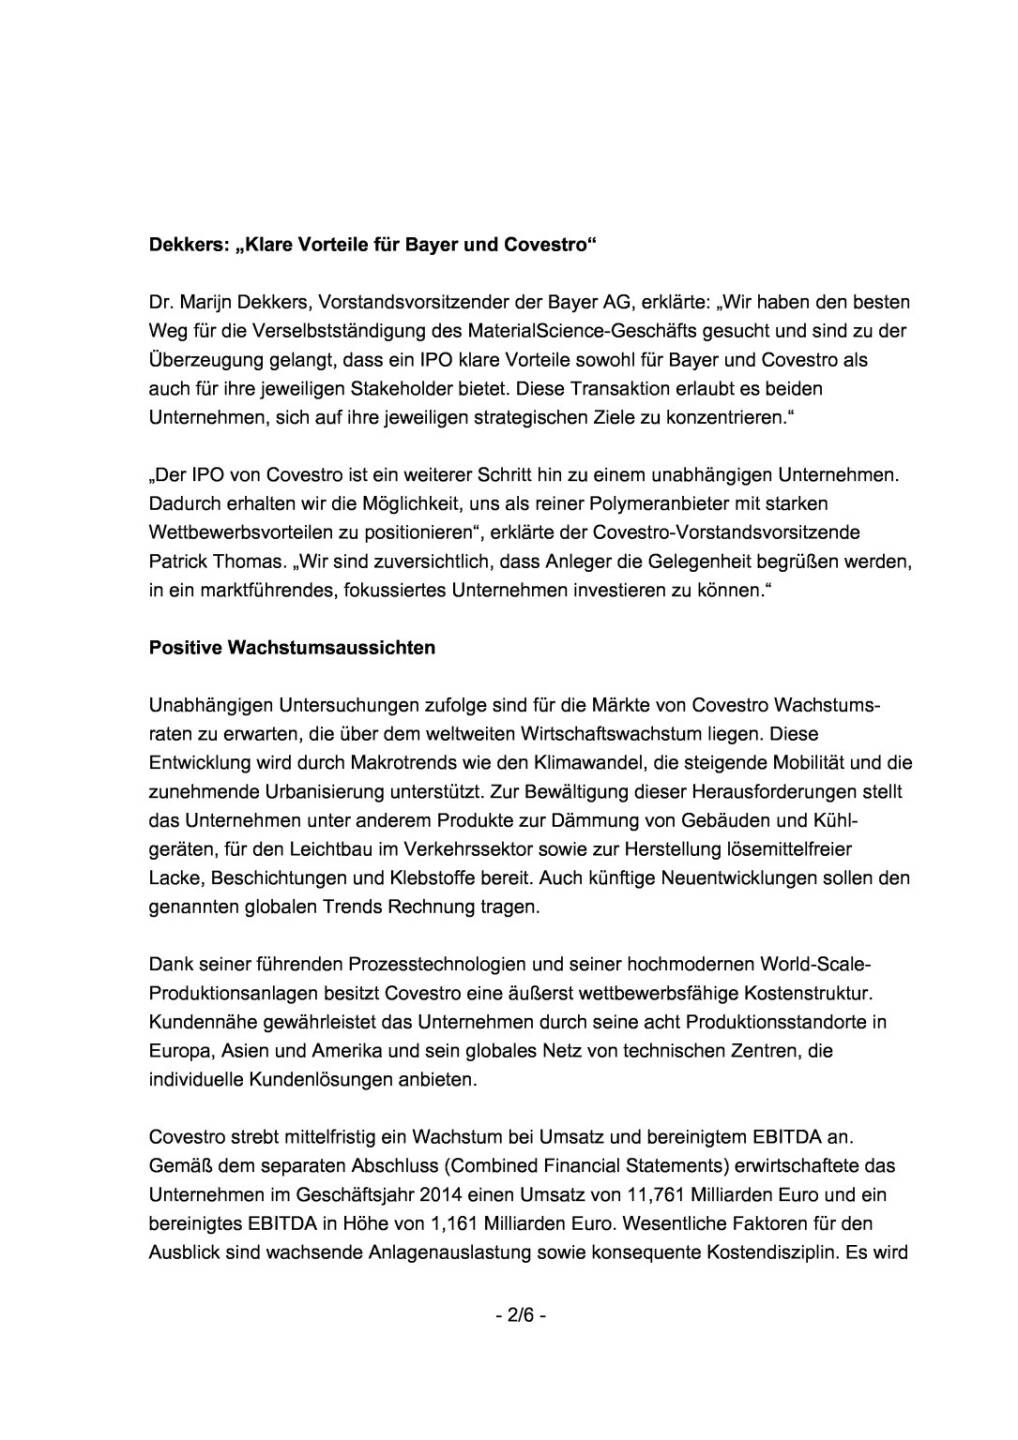 Bayer plant IPO für Covestro, Seite 2/6, komplettes Dokument unter http://boerse-social.com/static/uploads/file_349_bayer_plant_ipo_fur_covestro.pdf